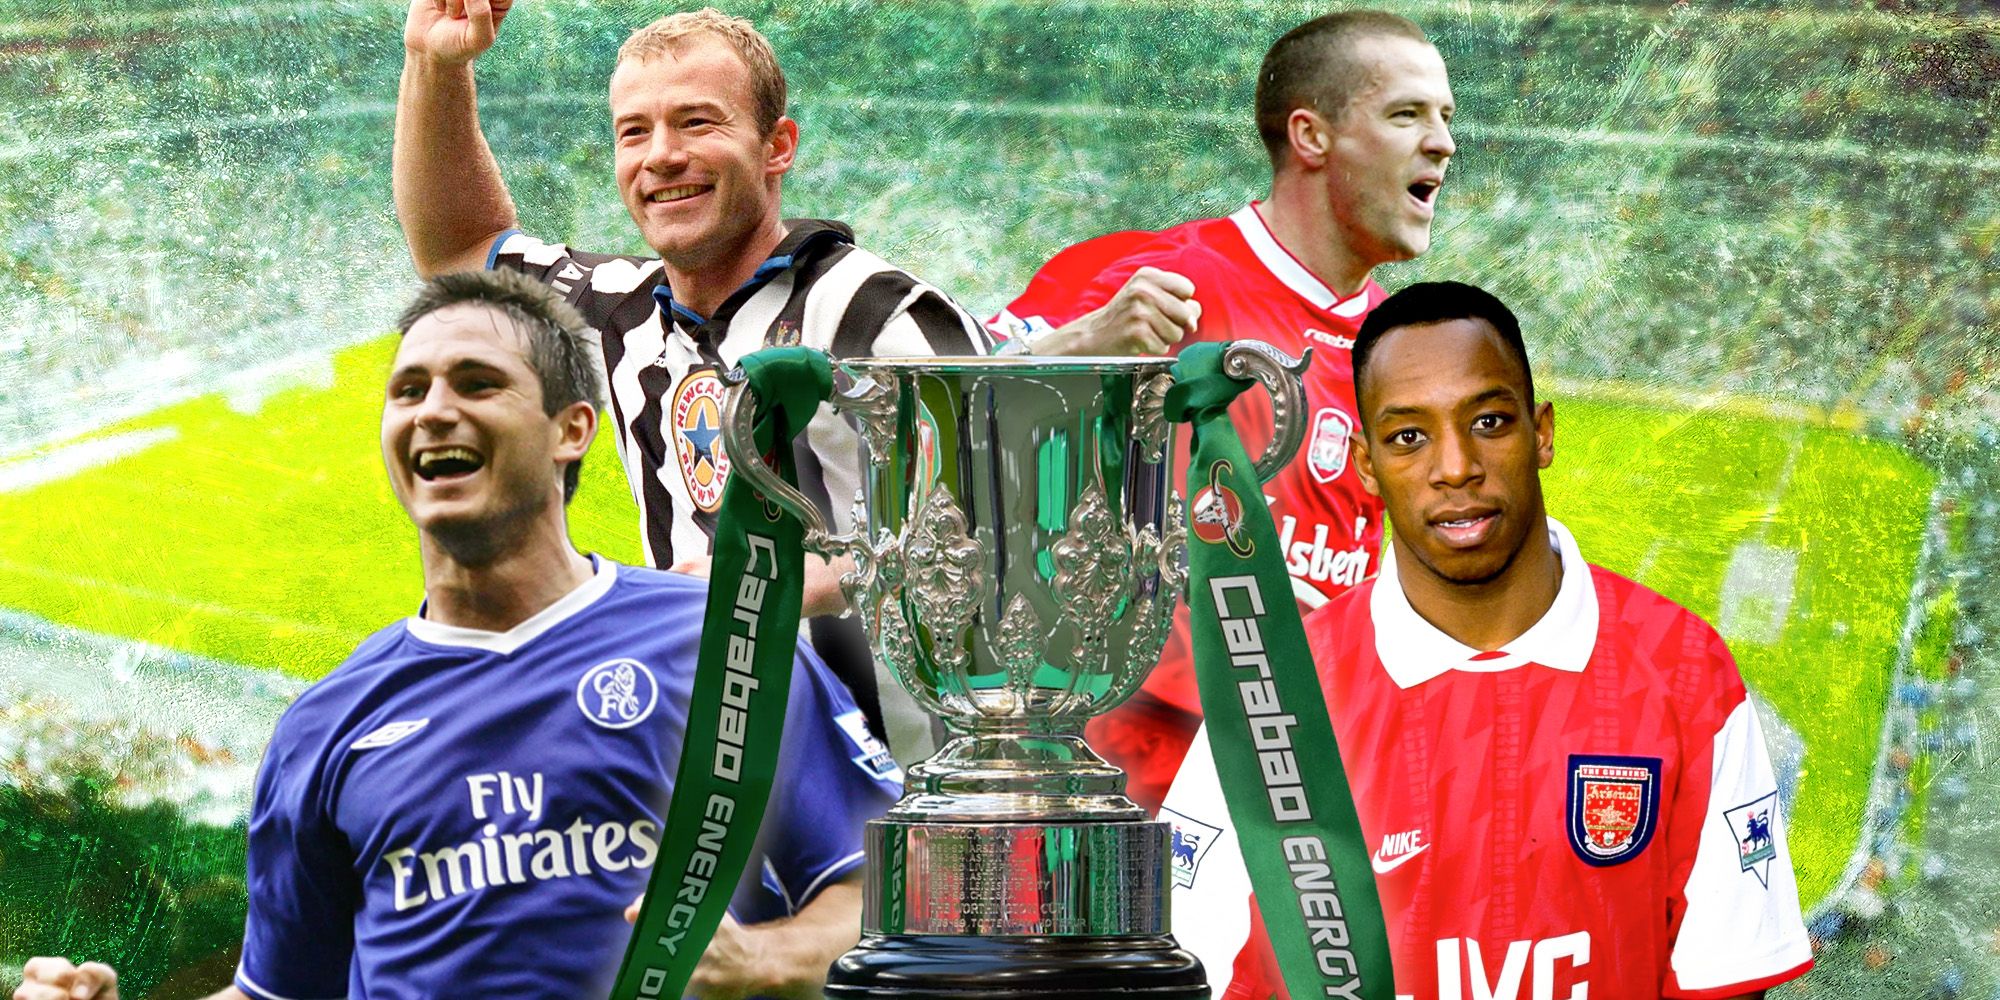 Top 10 scorers in Carabao Cup history featuring Ian Wright, Frank Lampard, Alan Shearer and Michael Owen